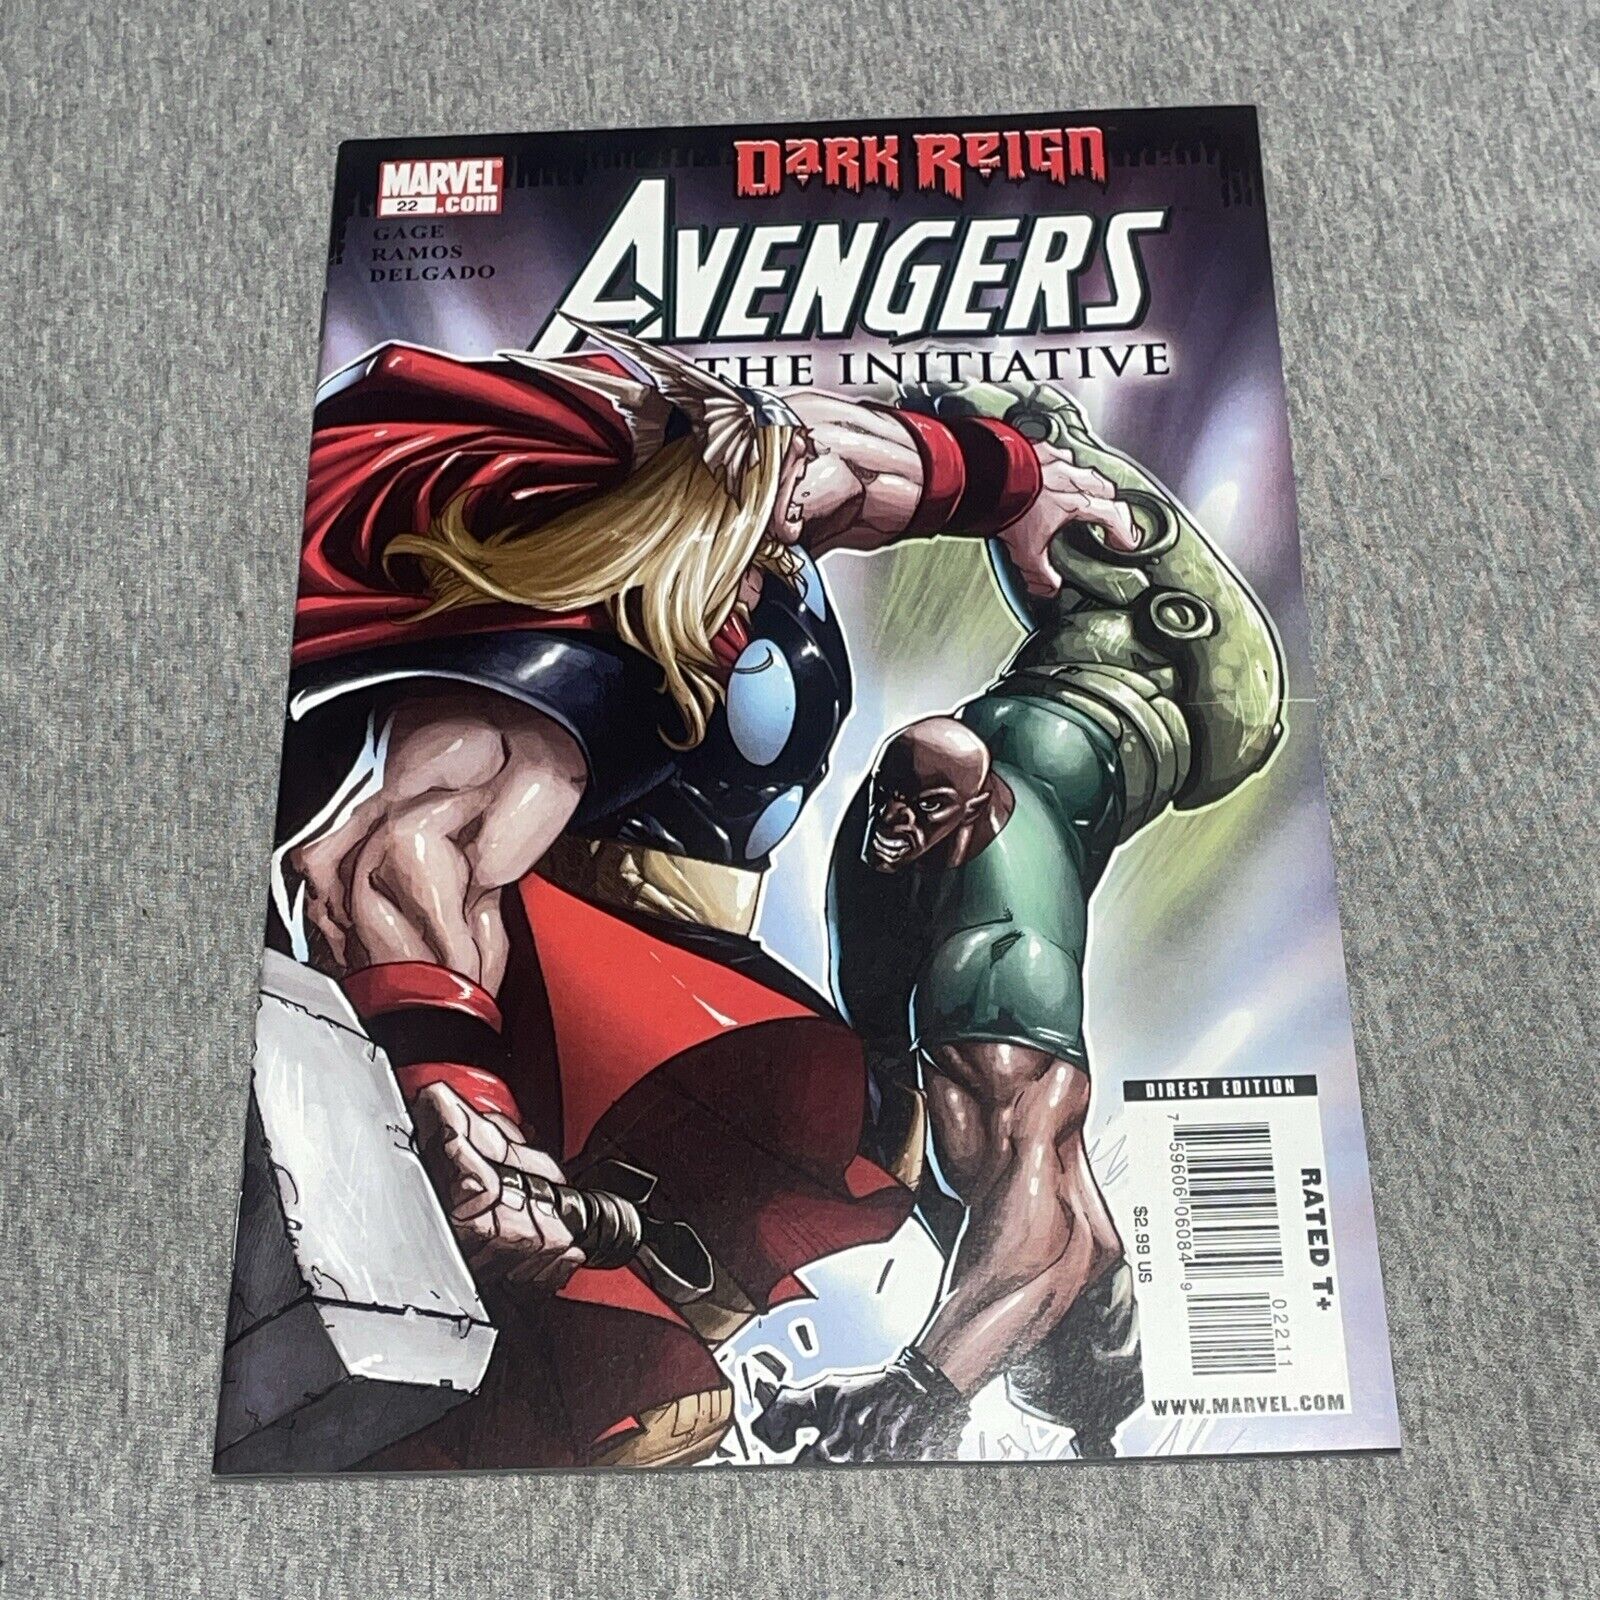 Avengers The Initiative #22 (Marvel Comics 2009) Dark Reign Direct Edition